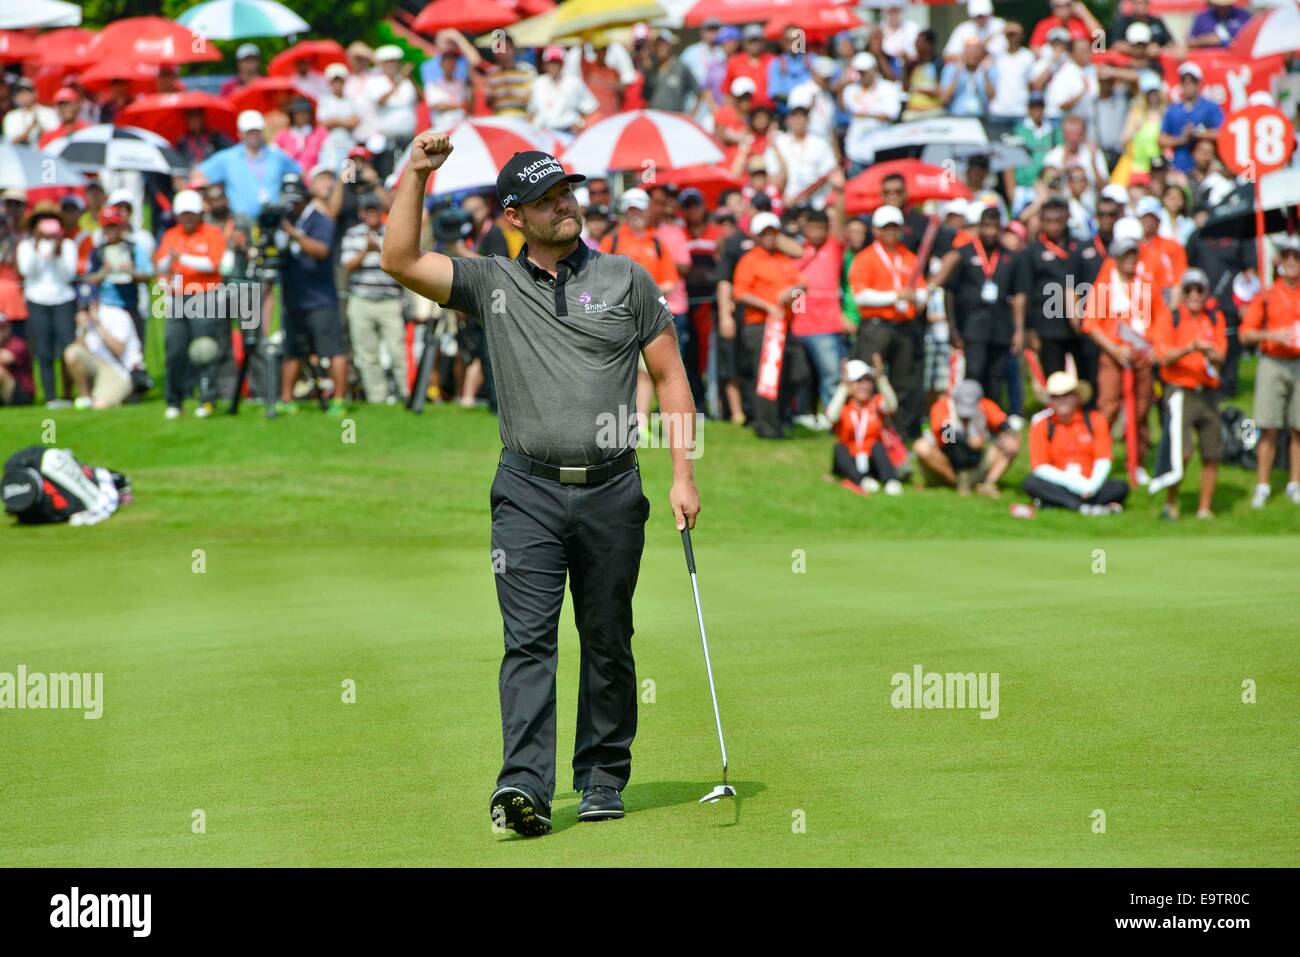 Kuala Lumpur. 2. November 2014. Ryan Moore aus den USA feiert nach dem Sieg der 2014 CIMB Classic Golf-Turnier in Kuala Lumpur auf 2. November 2014. © Chong Voon Chung/Xinhua/Alamy Live-Nachrichten Stockfoto